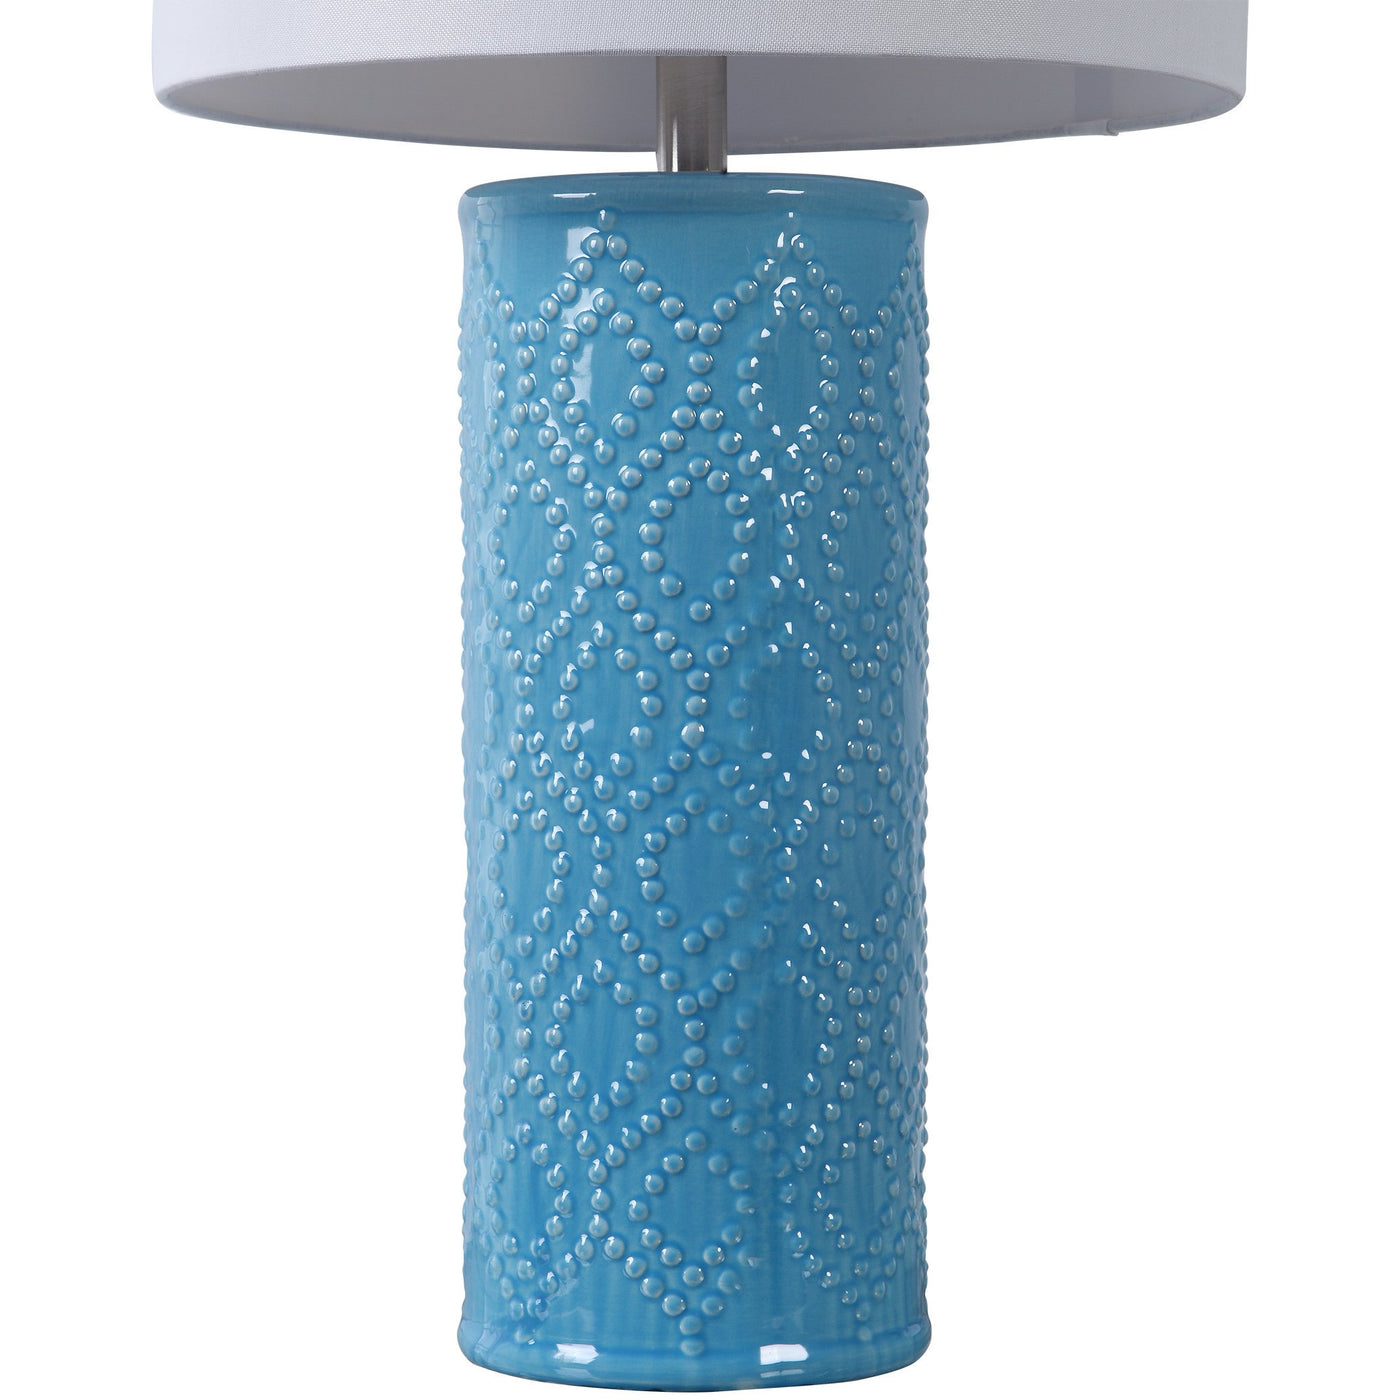 The Morocco - Table Lamp - Glass.com